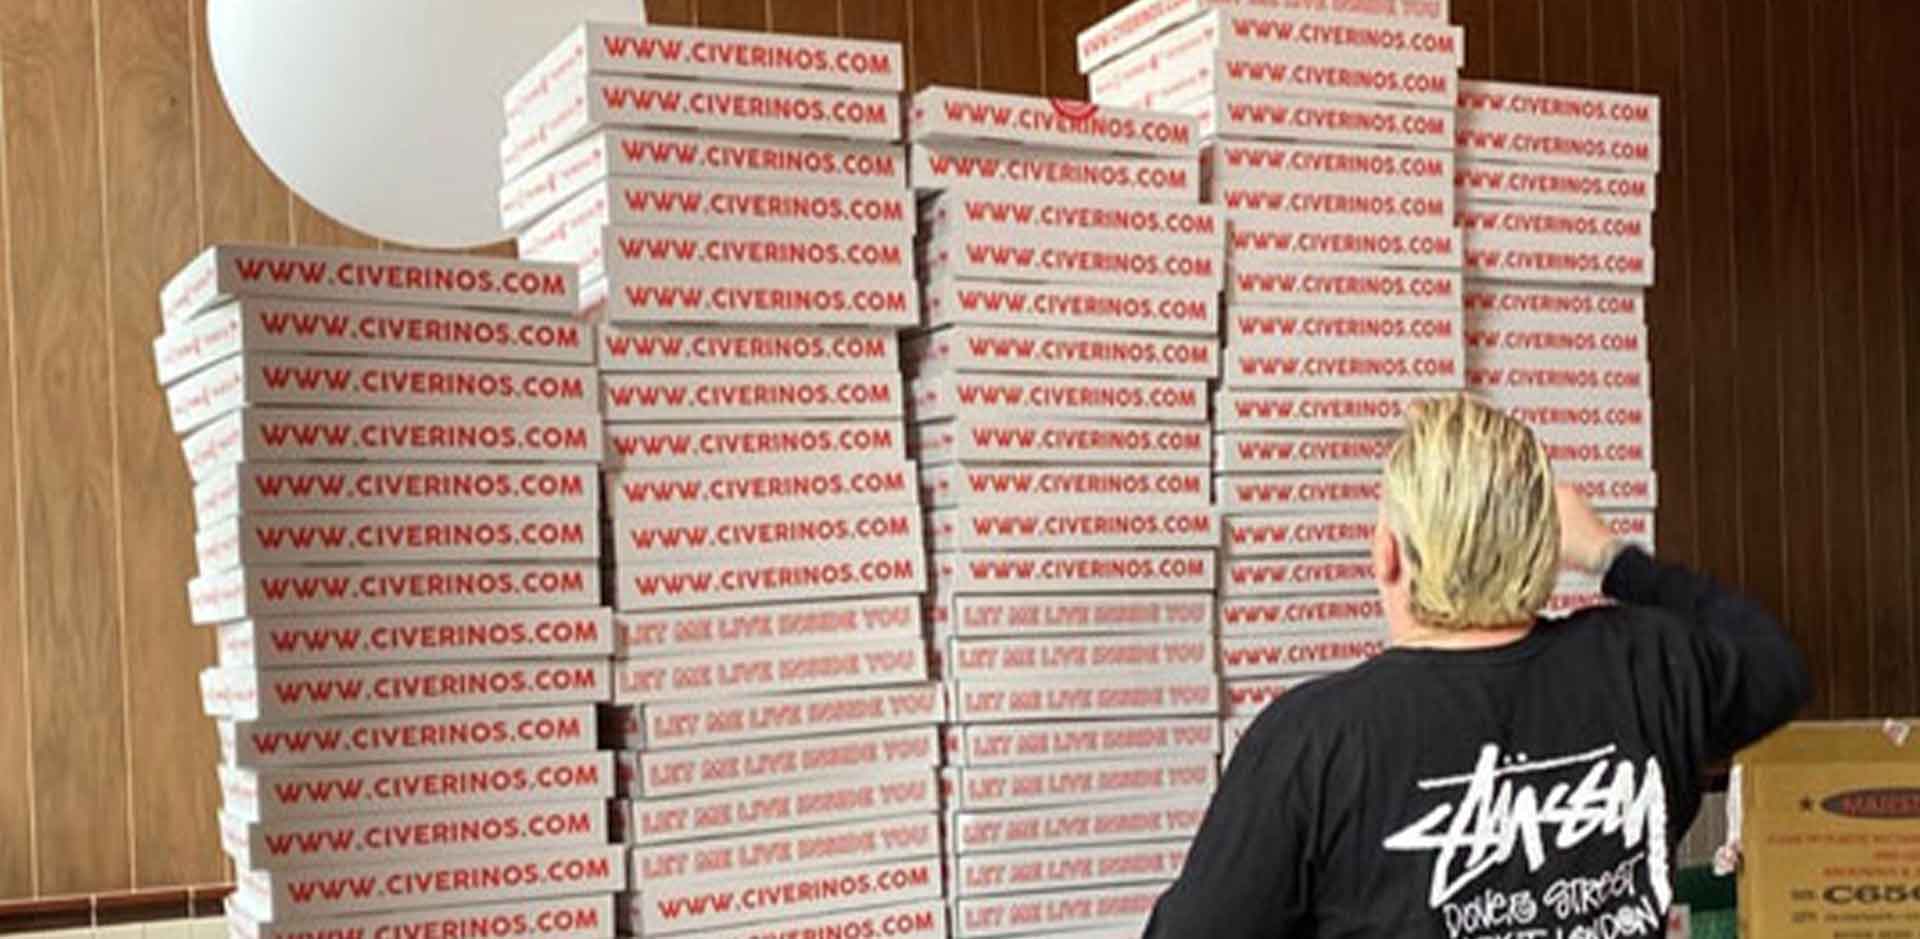 civerinos dough it yourself pizza kits in edinburgh boxes